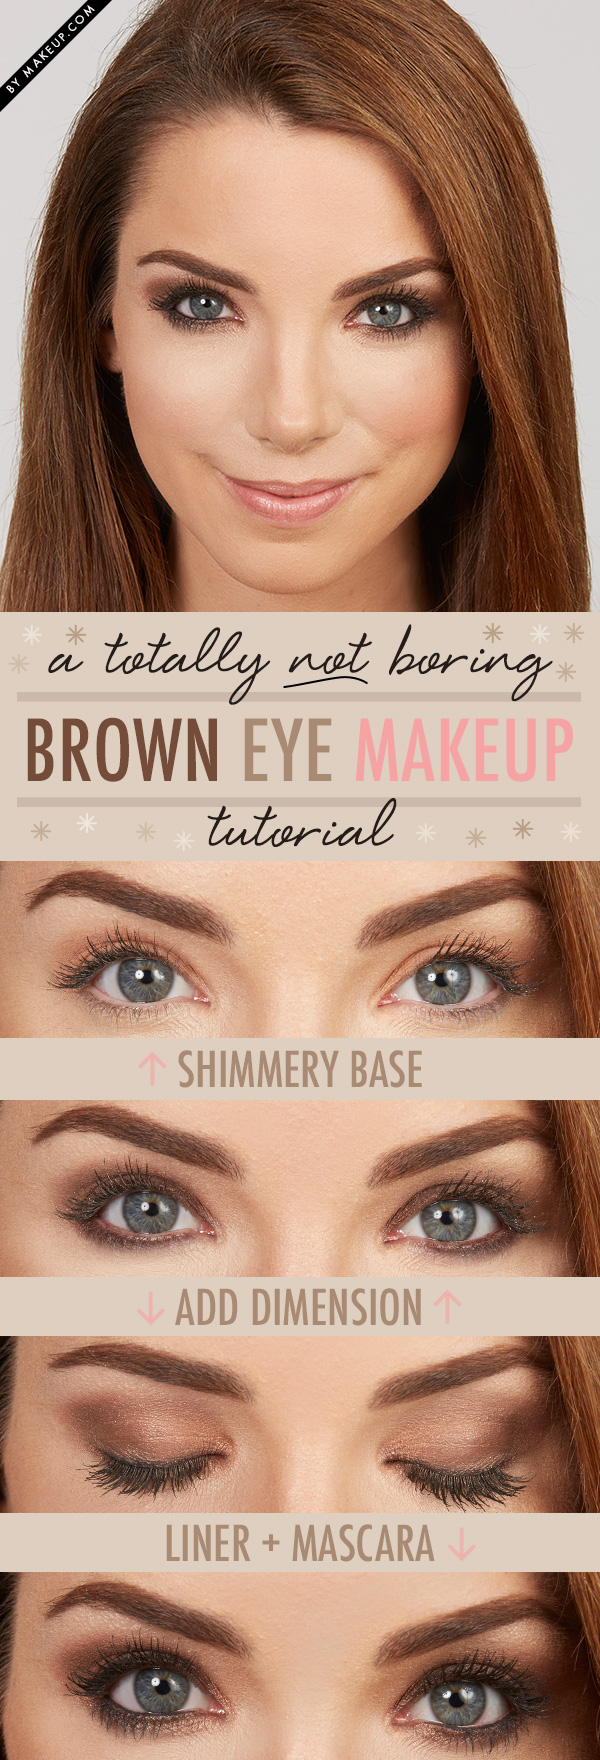 Brown Eye Makeup How To Smokey Brown Eye Makeup Makeup